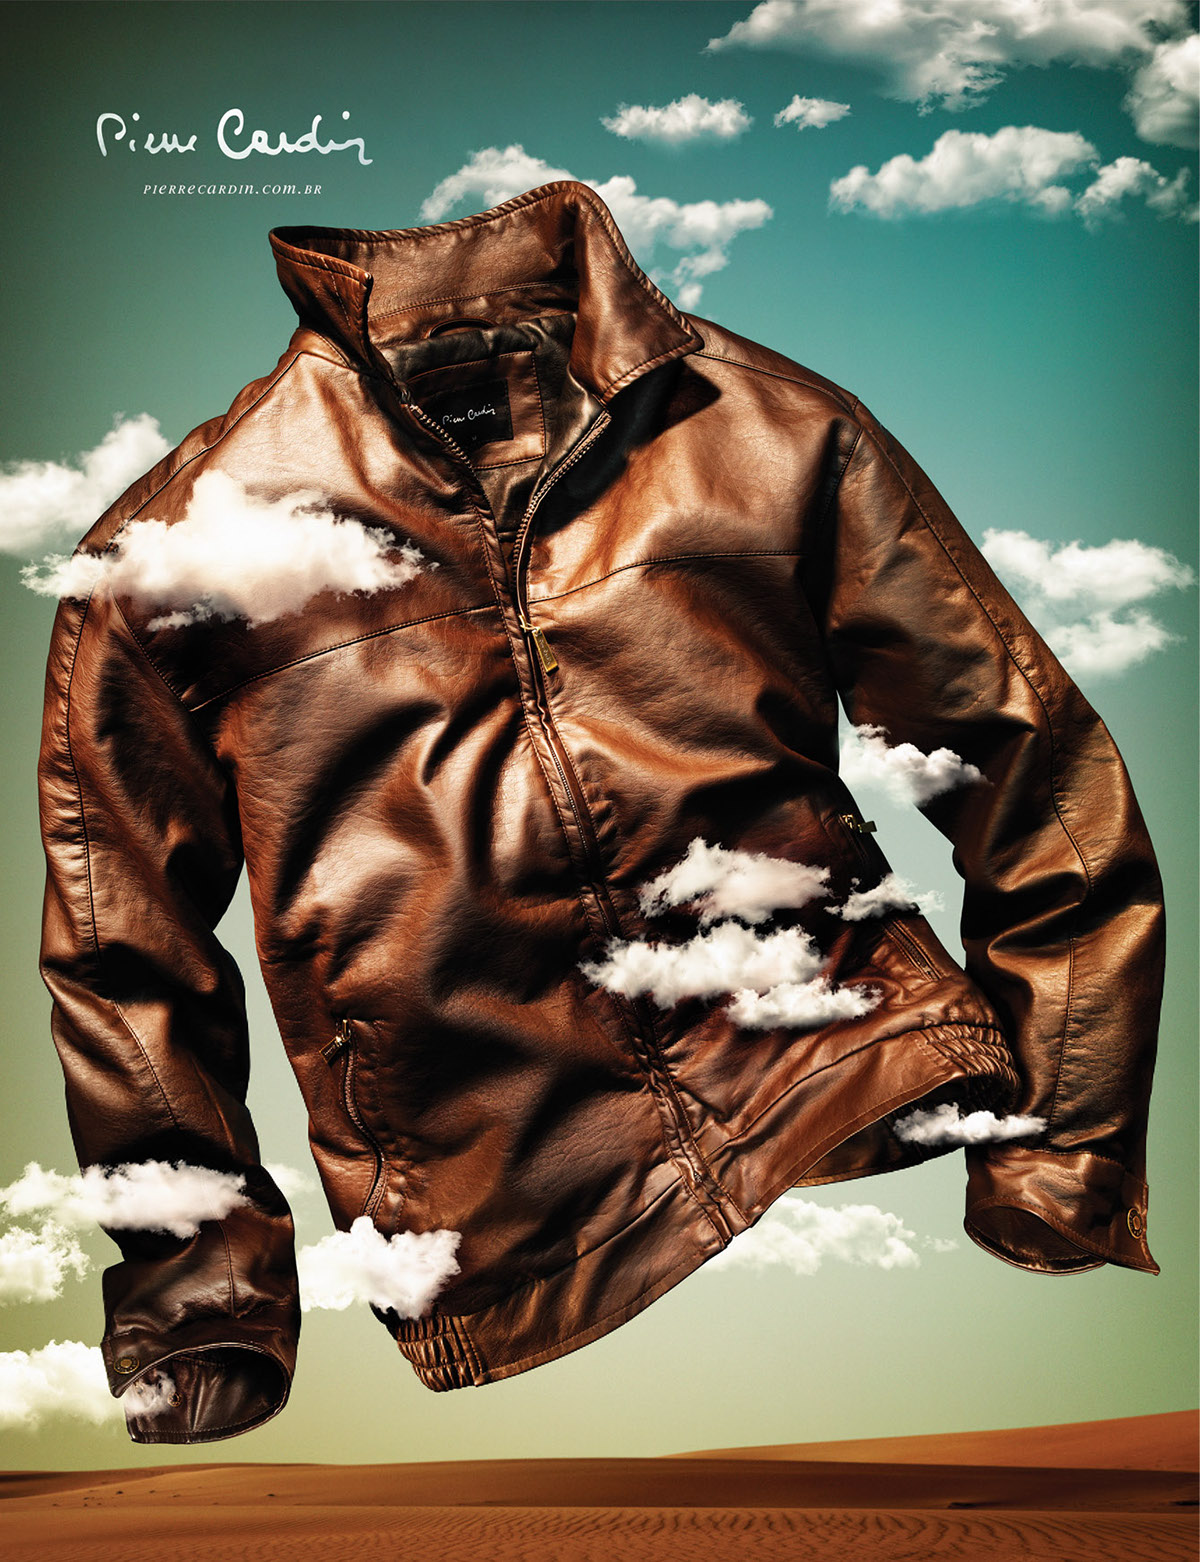 Pierre Cardin  clouds Fashion campaign